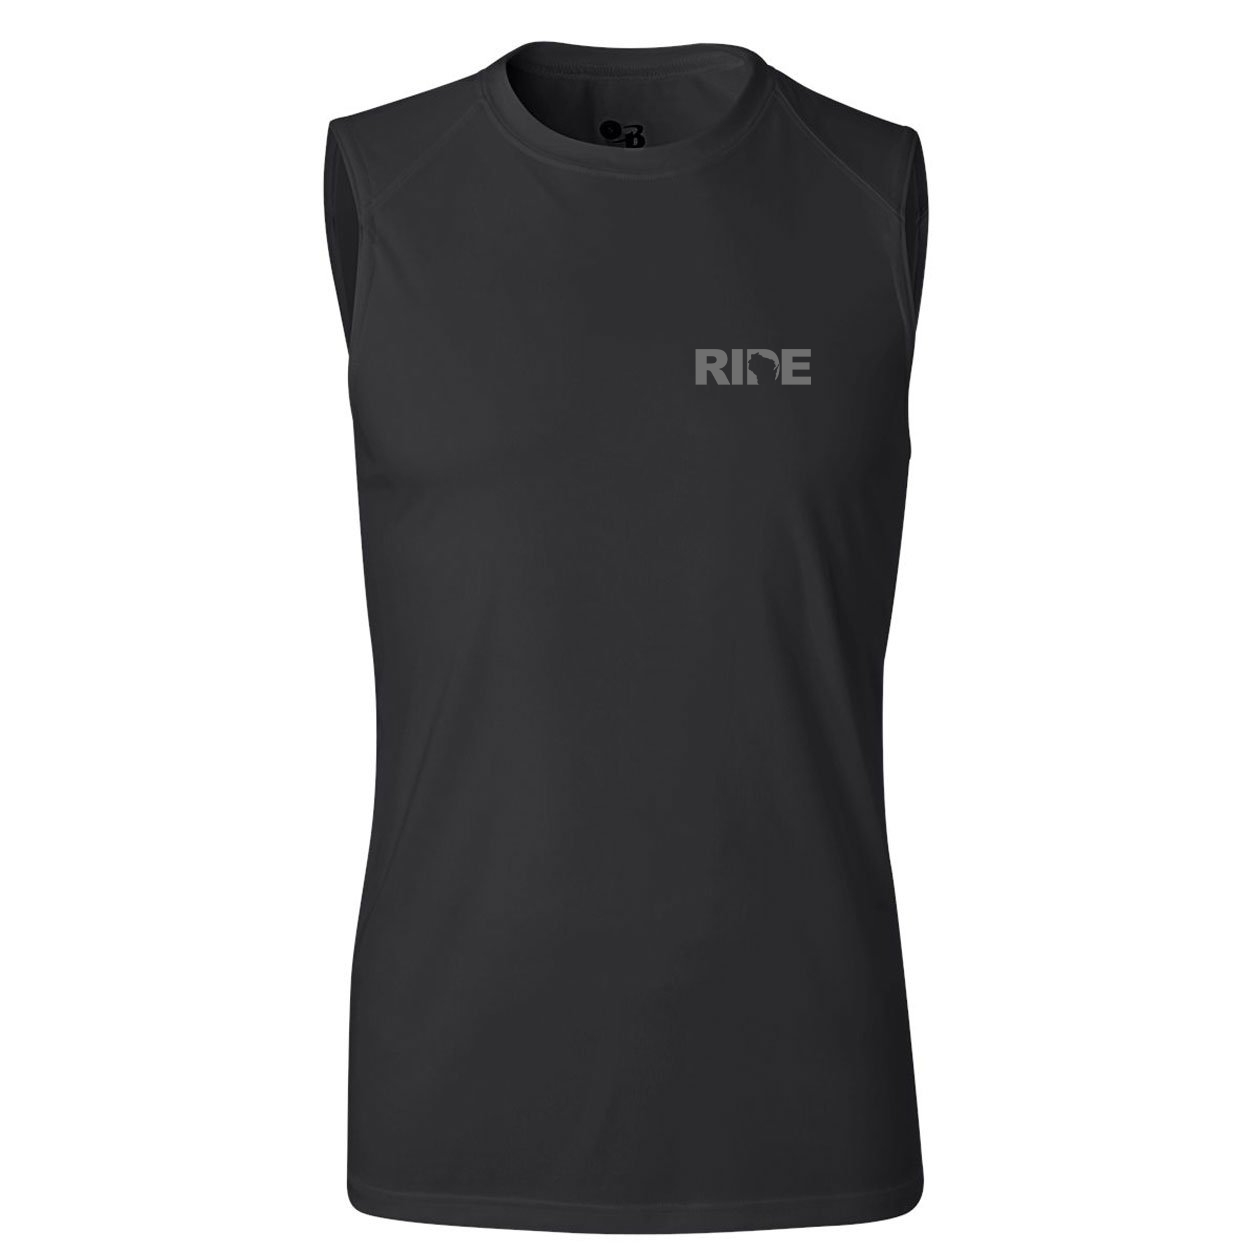 Ride Wisconsin Night Out Unisex Performance Sleeveless T-Shirt Black (Gray Logo)